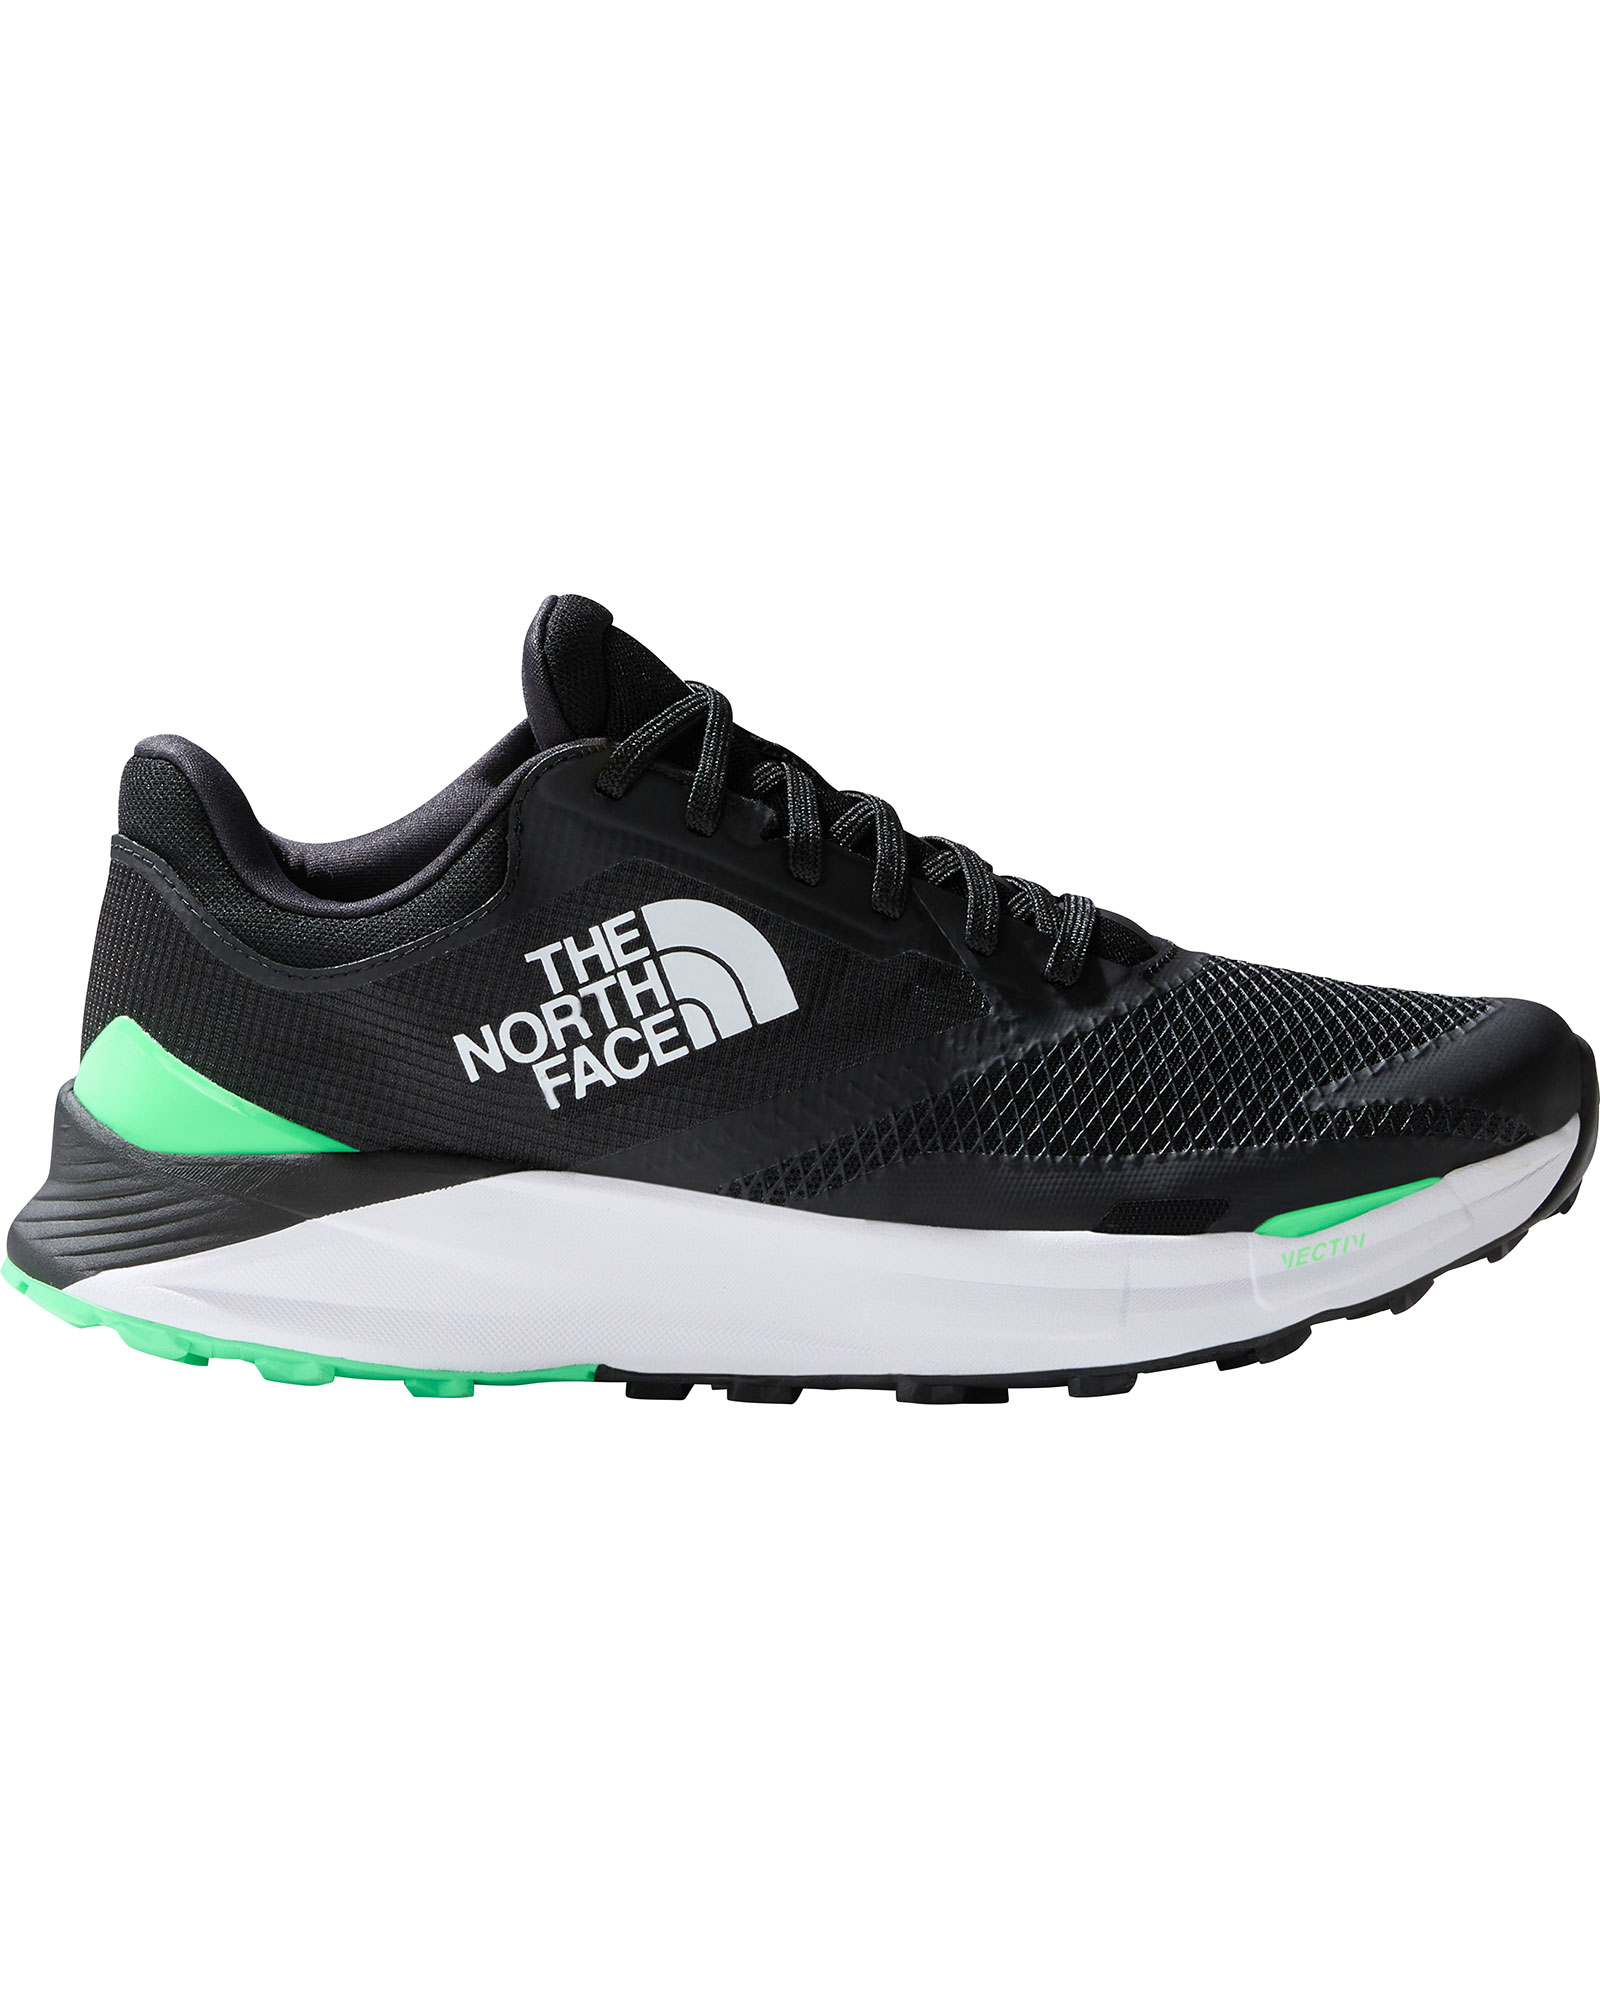 The North Face Vectiv Enduris 3 Men’s Trail Shoes - TNF Black/Chlorophyll Green UK 7